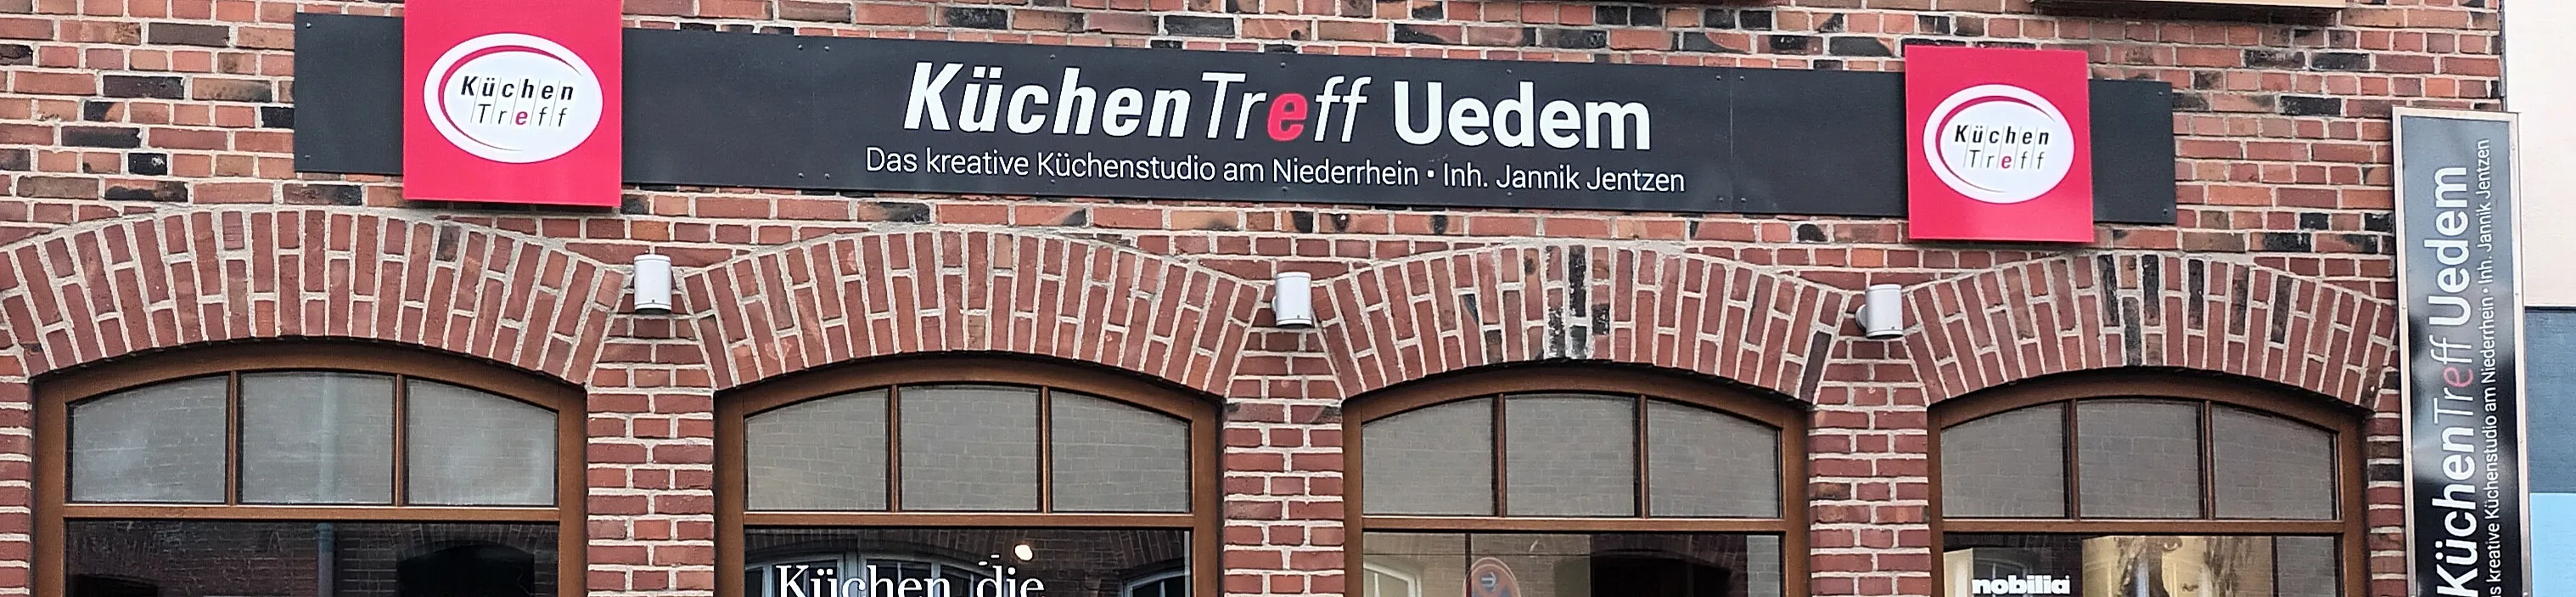 kuechentreff-uedem-top-banner